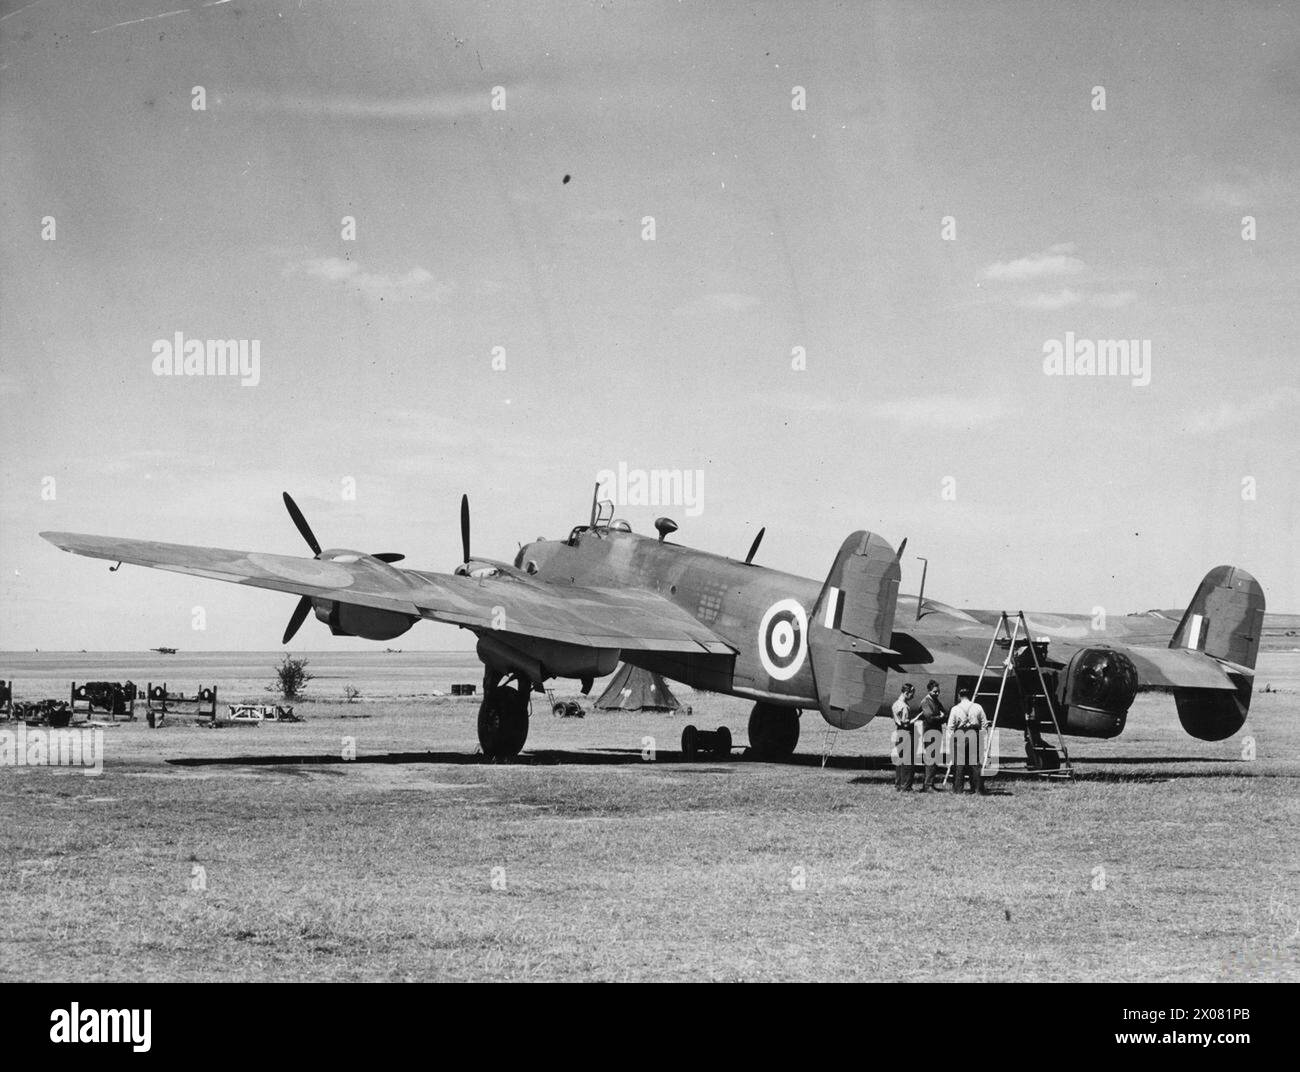 RAF BOMBER COMMAND - Handley Page Halifax Mk I L7245, the second prototype aircraft, at Radlett, Hertfordshire, 1940 Stock Photo